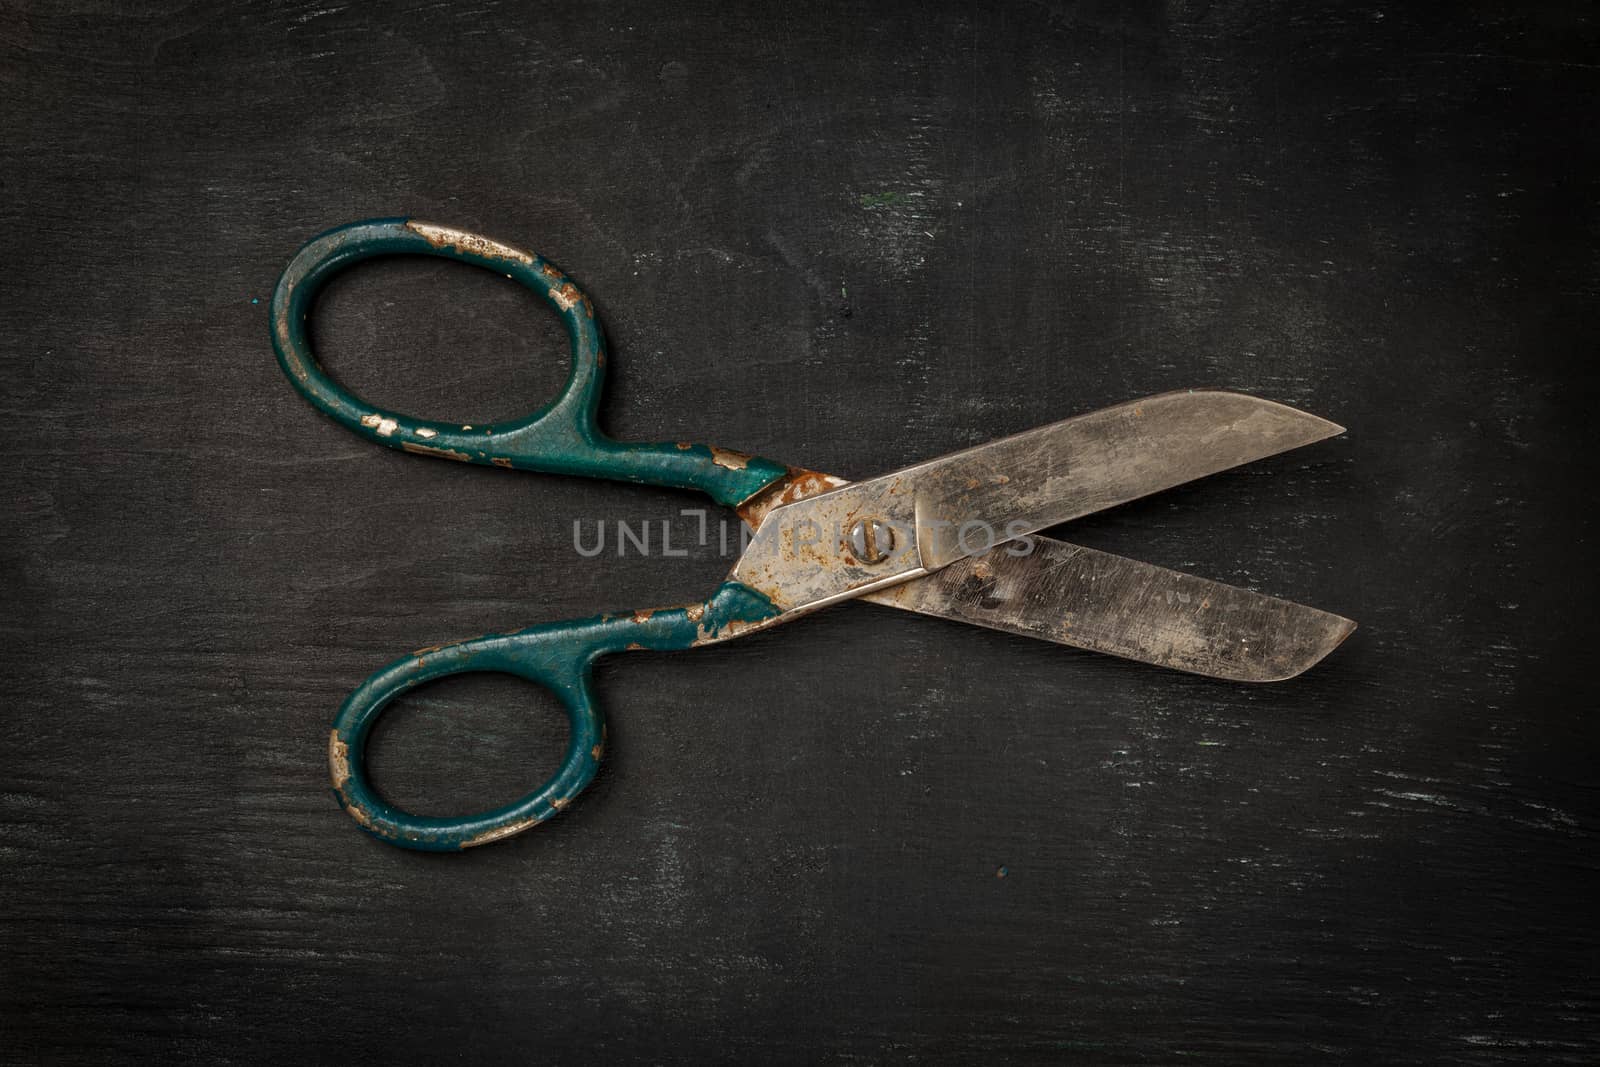 Vintage scissors on black wooden background by igor_stramyk